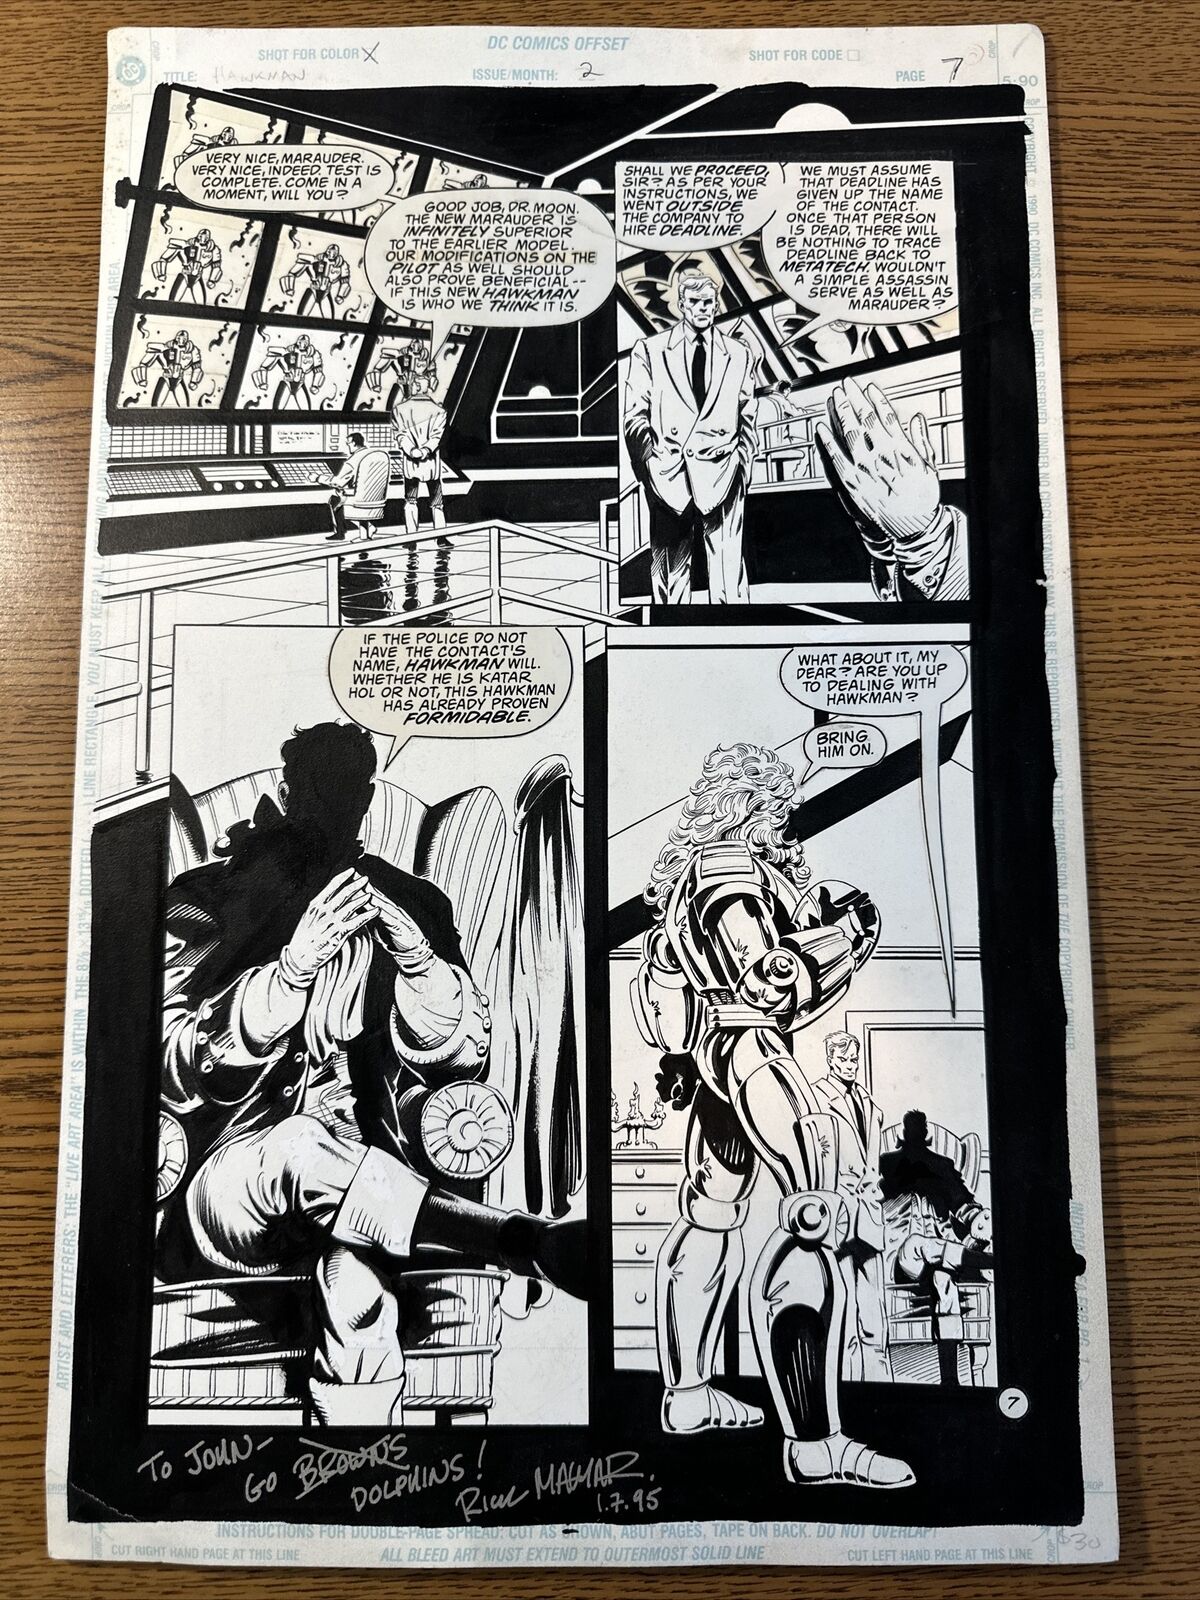 Hawkman #2 Volume 3 Original Art Page #7 DC Comics 1993 Jan Duursema Rick Magyar